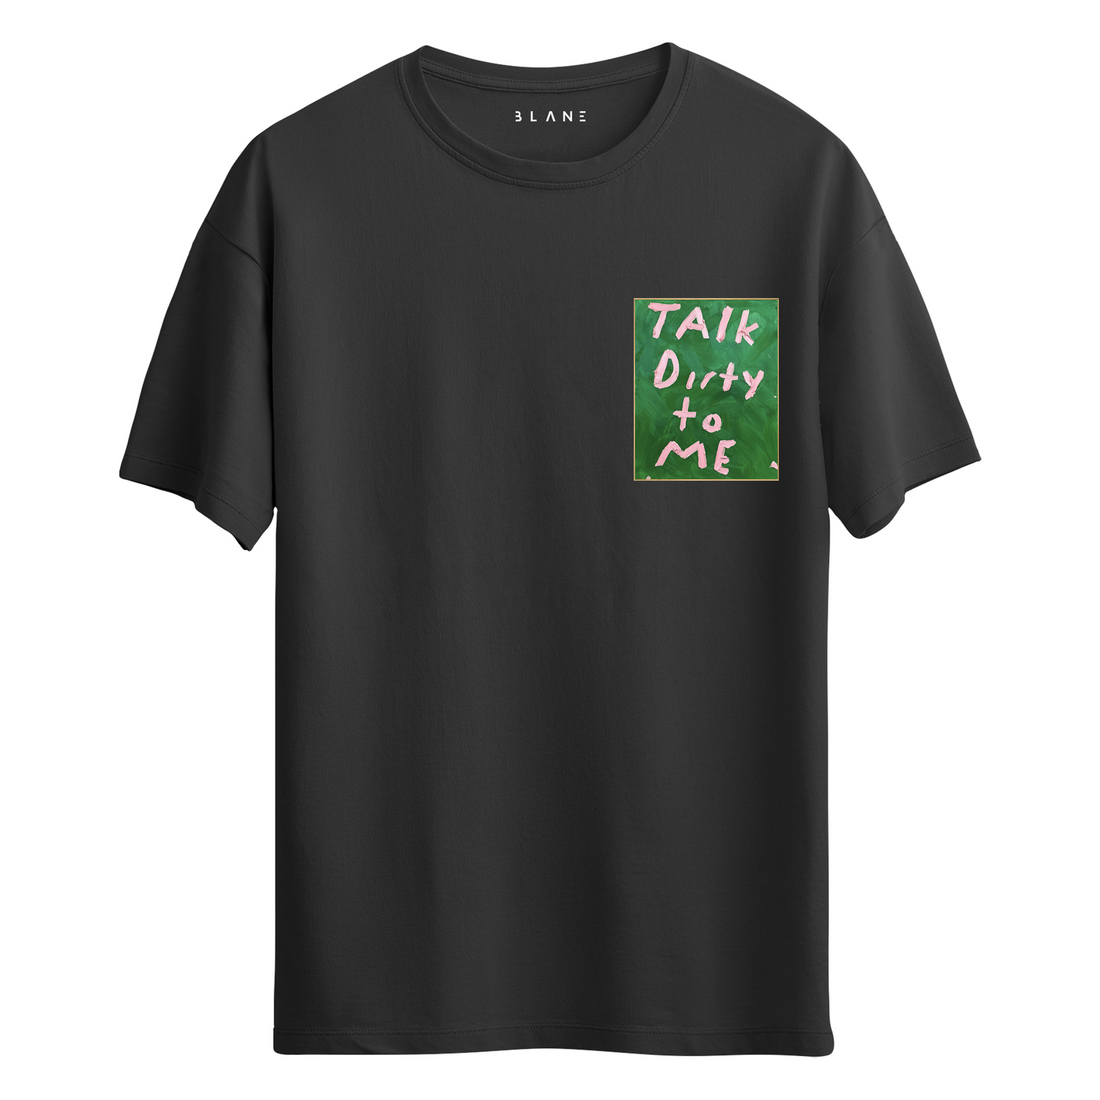 Talk Dirty To Me - T-Shirt